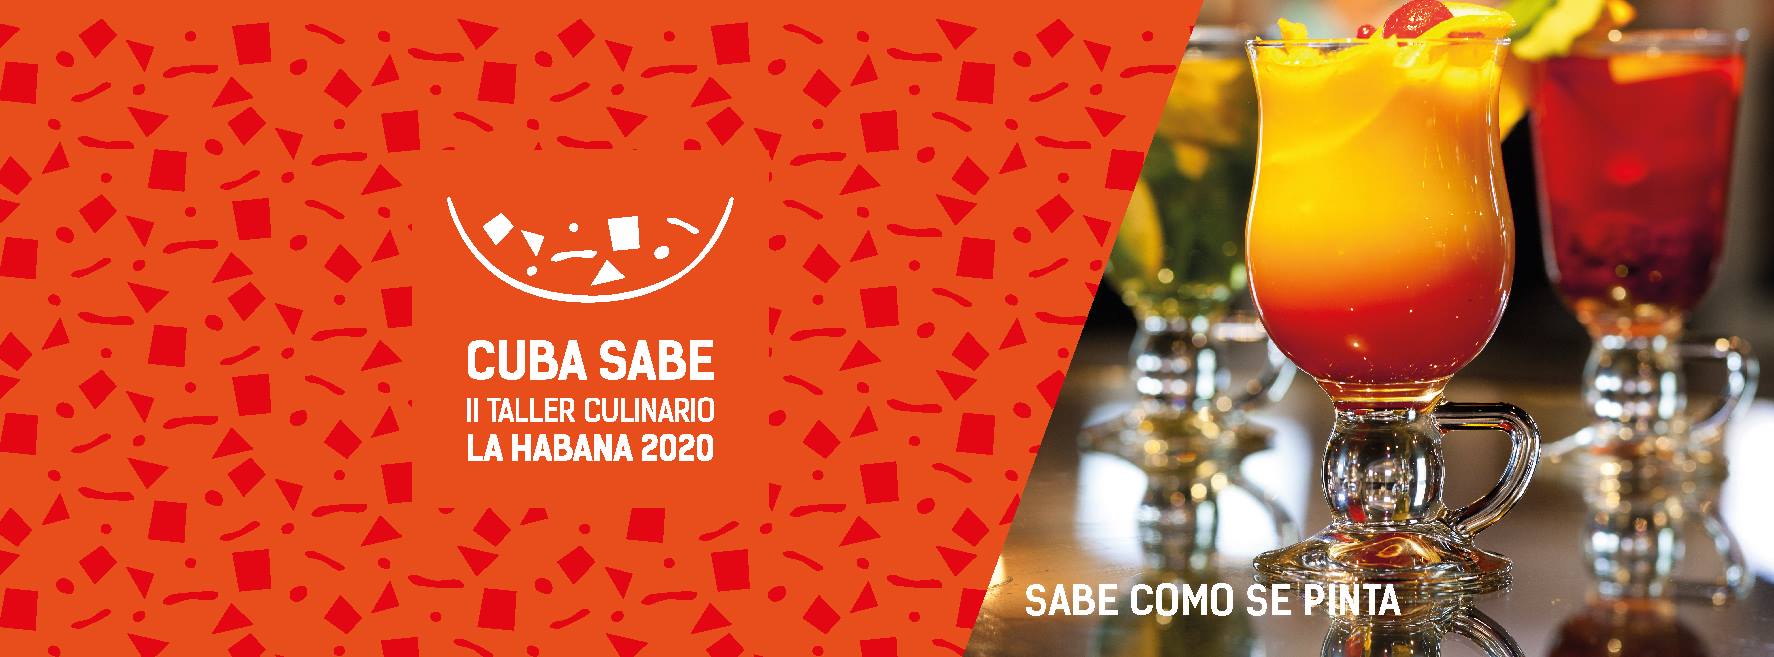 Taller Culinario Cuba Sabe 2020 promueve valores de la cocina cubana 